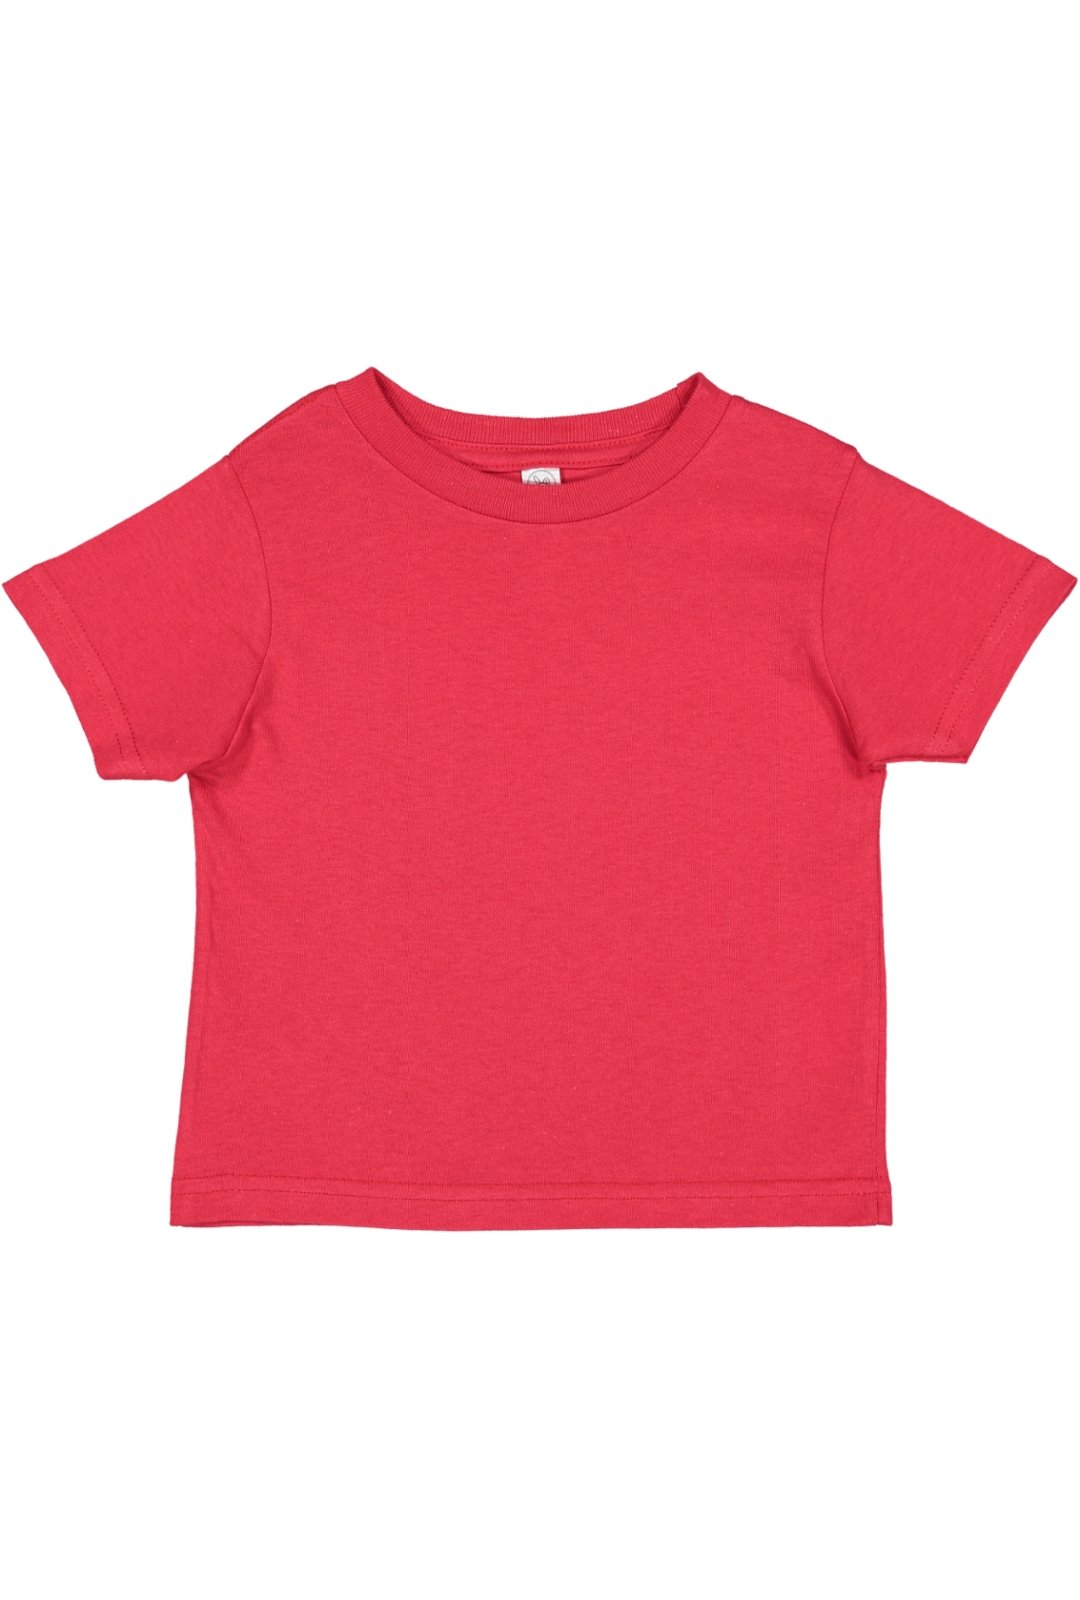 RABBIT SKINS Fine Jersey Toddler T-Shirt Boy & Girl| Kids Tee| Blank Child Tshirt